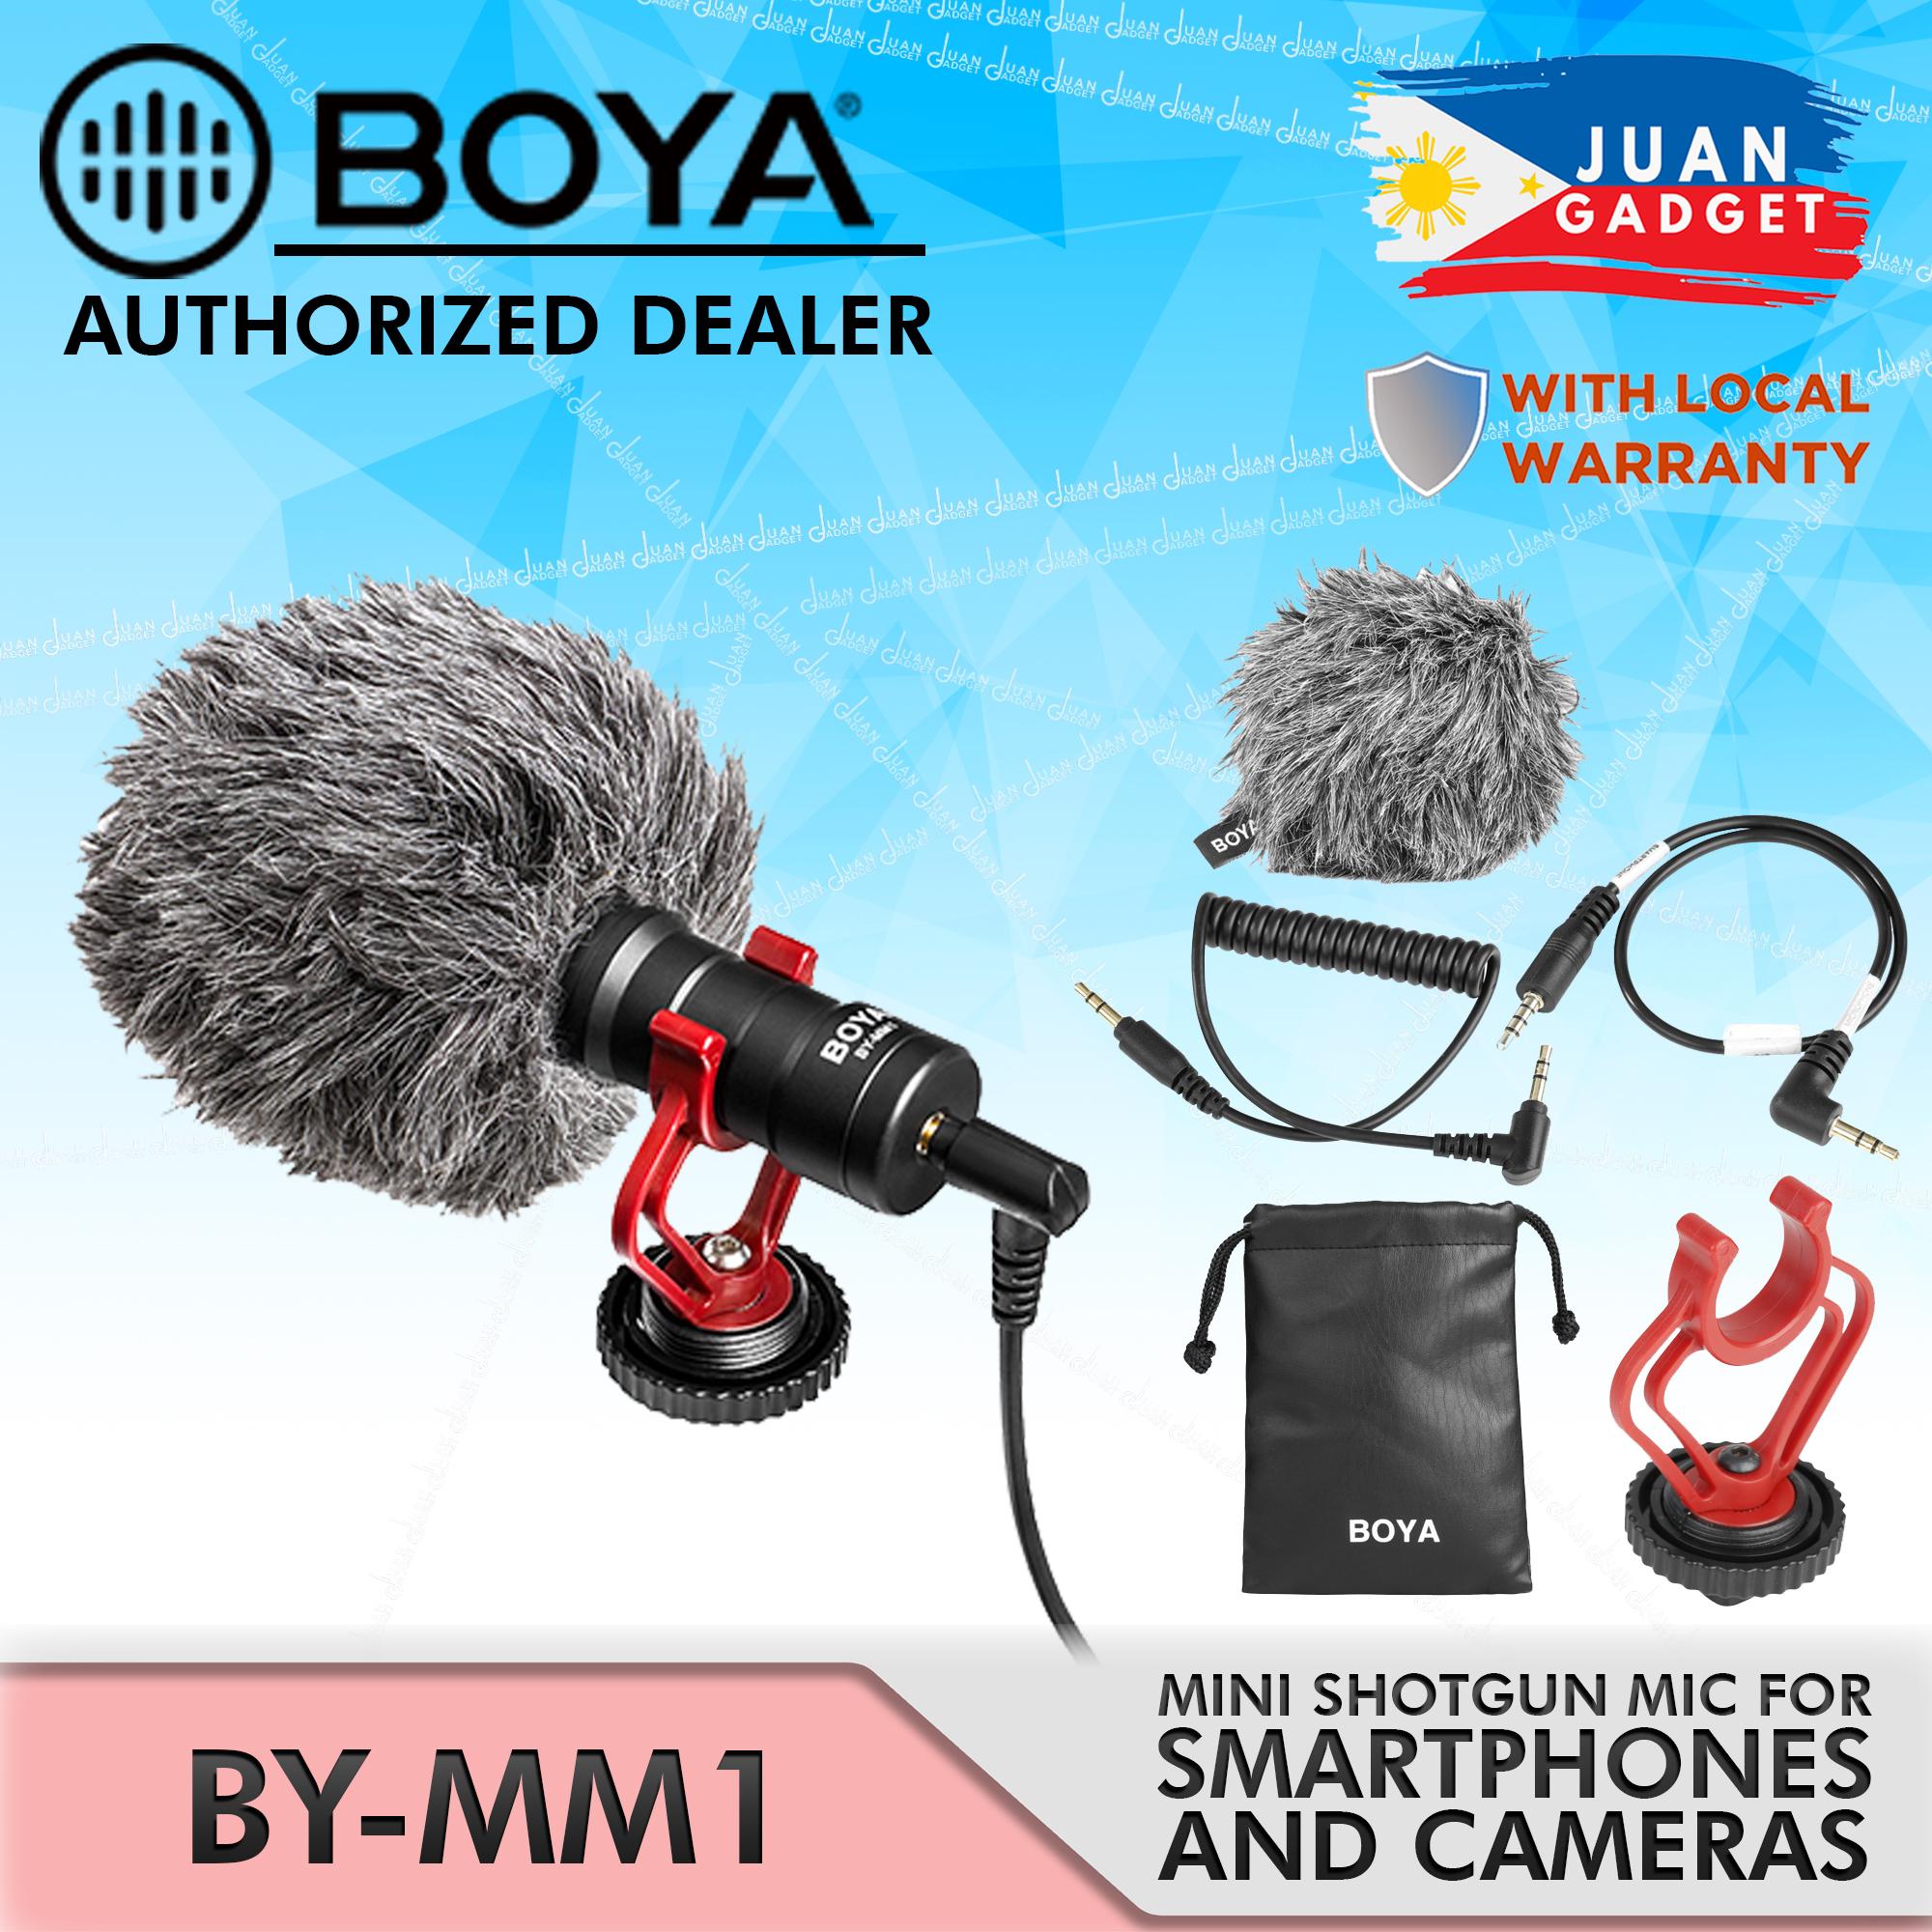 Boya Buy Boya At Best Price In Philippines Www Lazada Com Ph